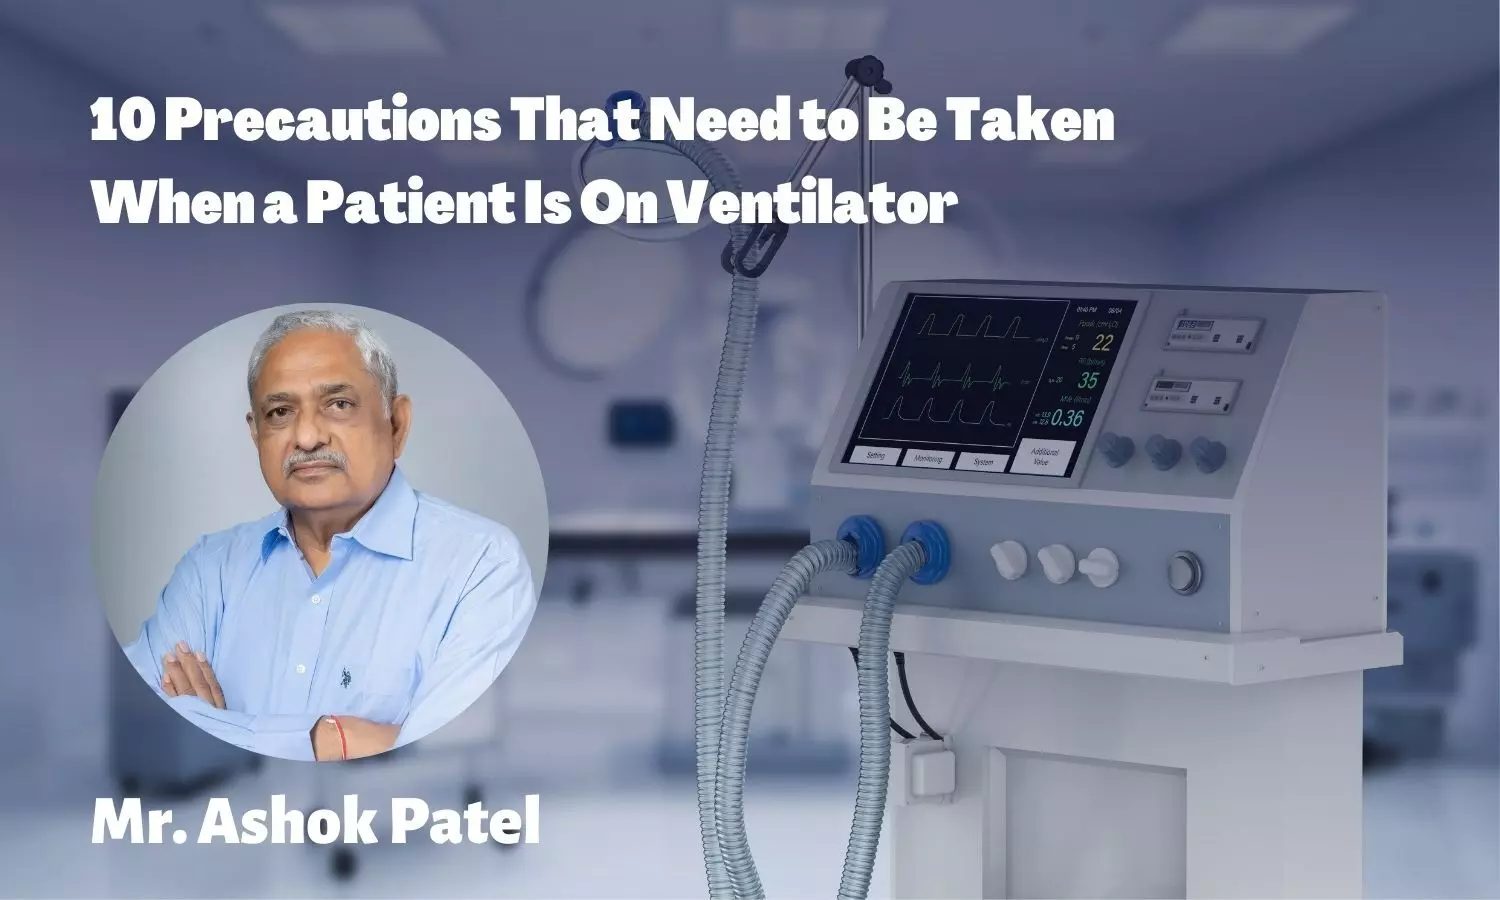 Ten Precautions That Should Be Taken When a Patient Is On Ventilator